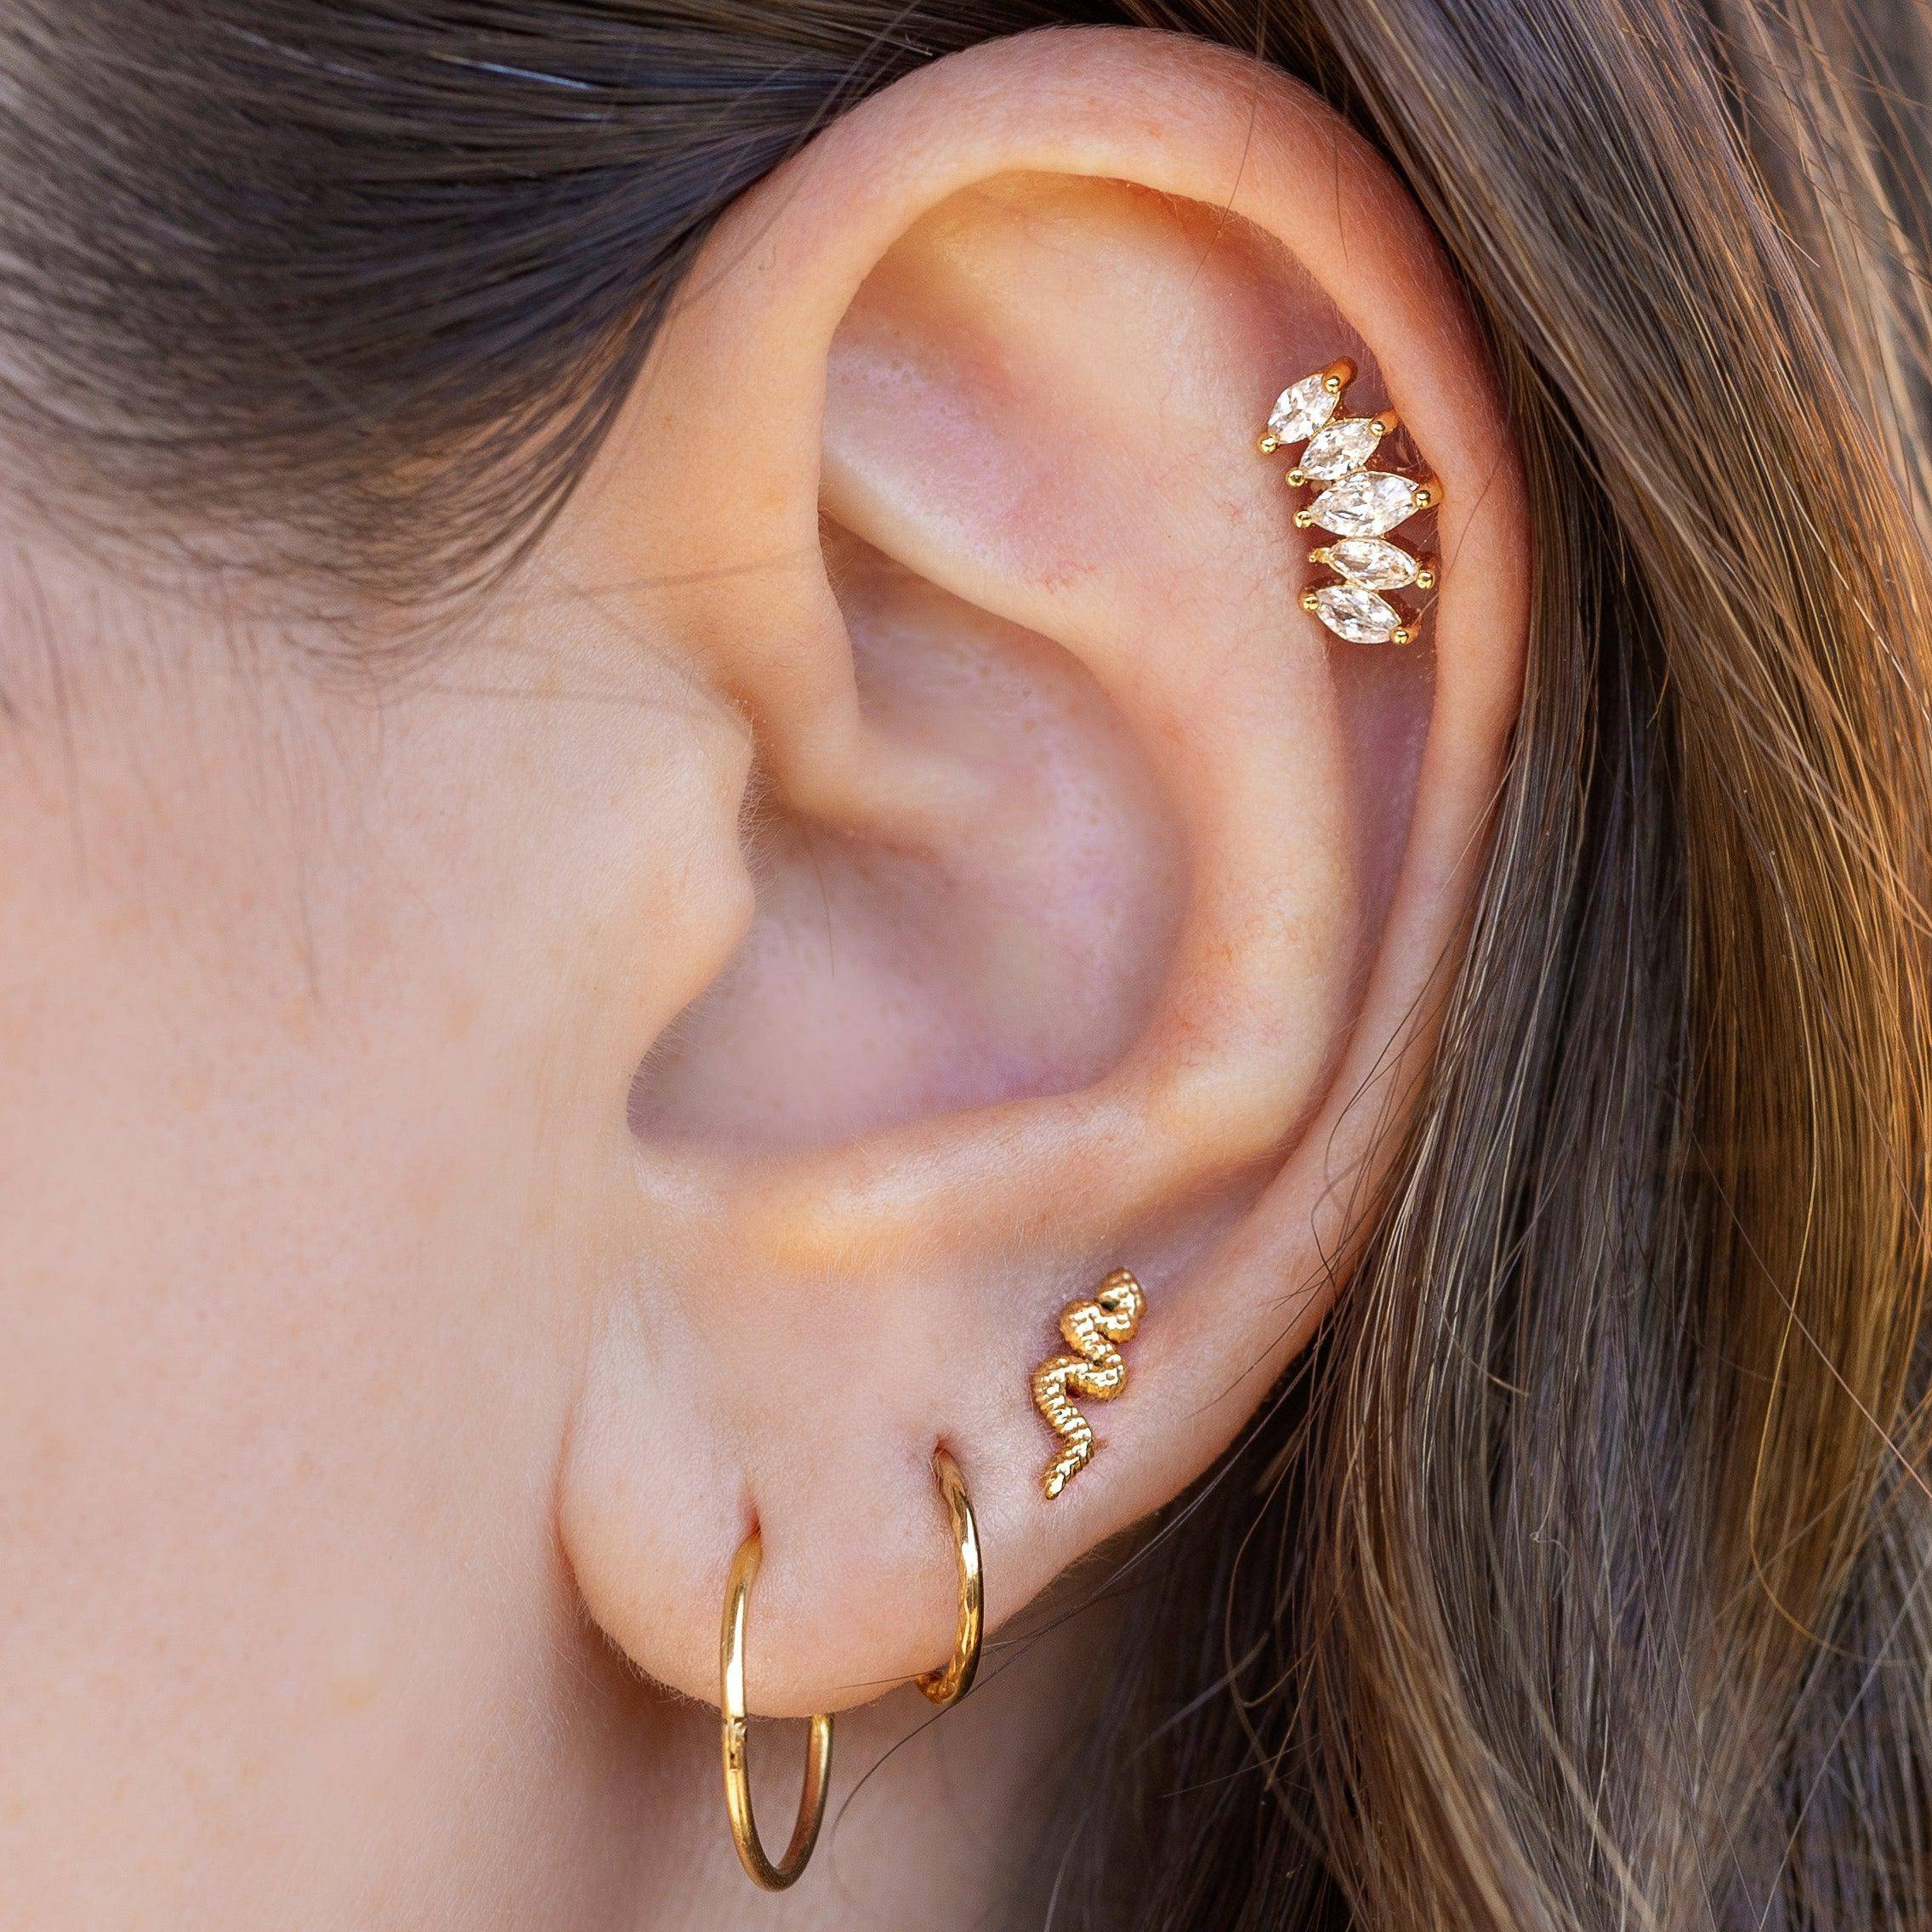 Classy Ear Piercing Ideas for Women at MyBodiArt.com - Upper Ear Cartilage  Earring - Conch Ring - Fake Piercing Ear … | Ear cuff earings, Ear cuff,  Crystal ear cuff